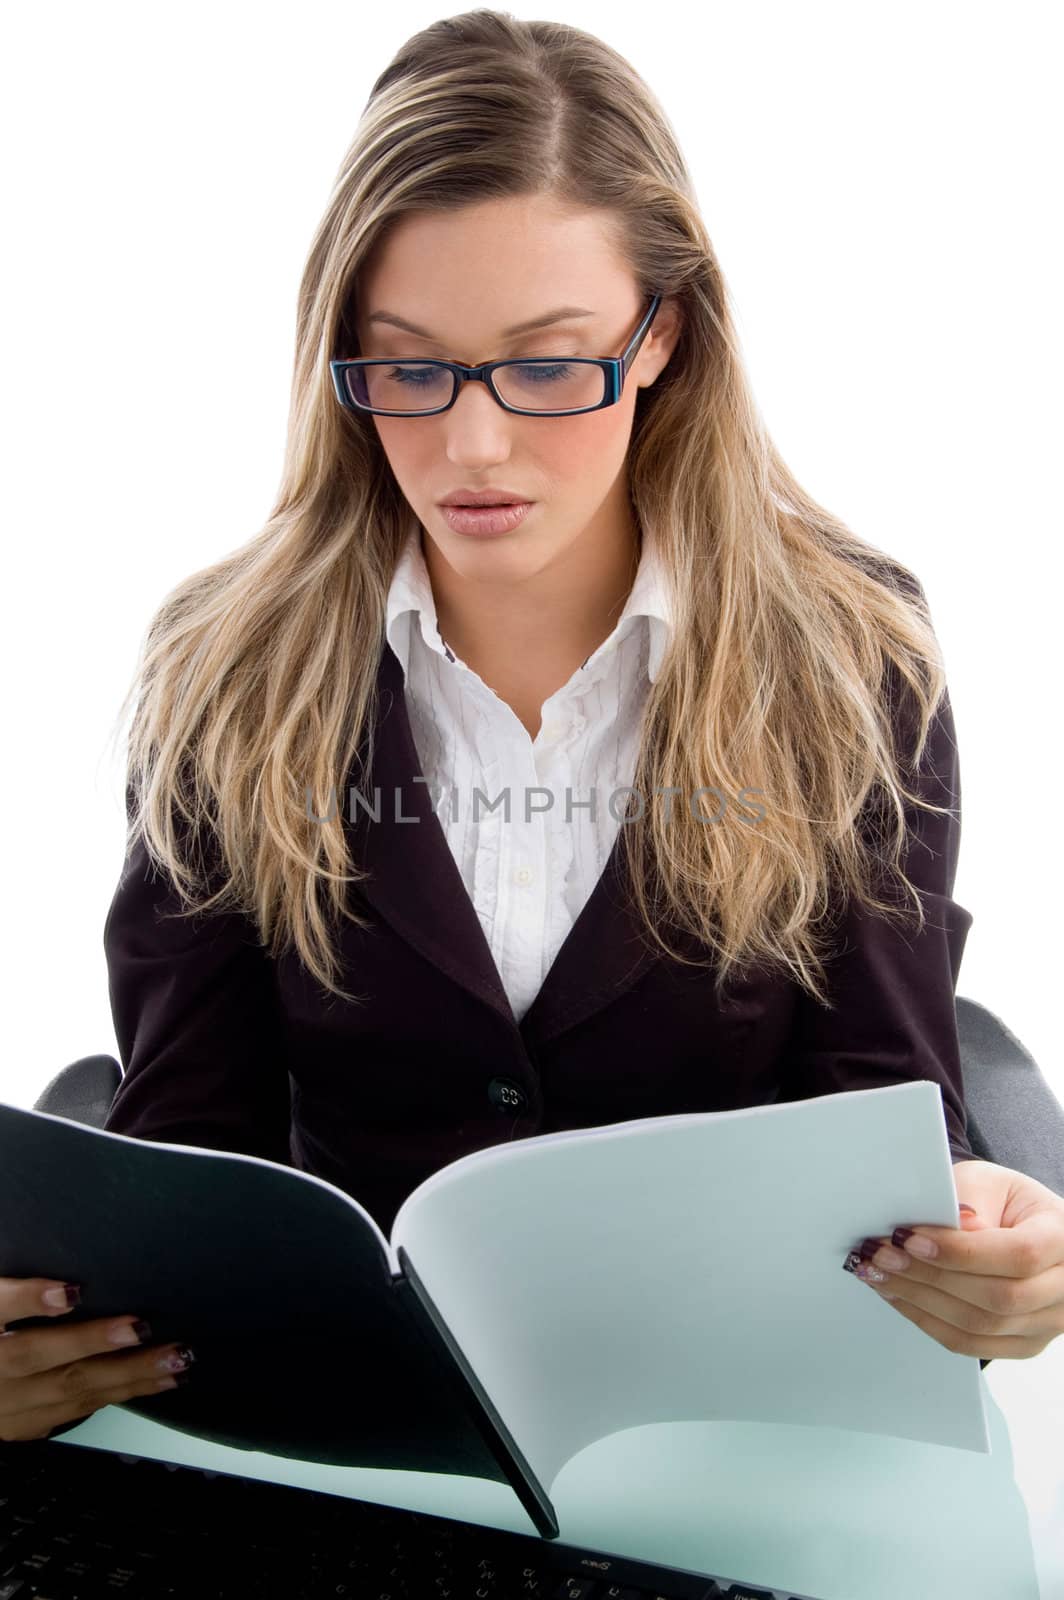 female reading document by imagerymajestic